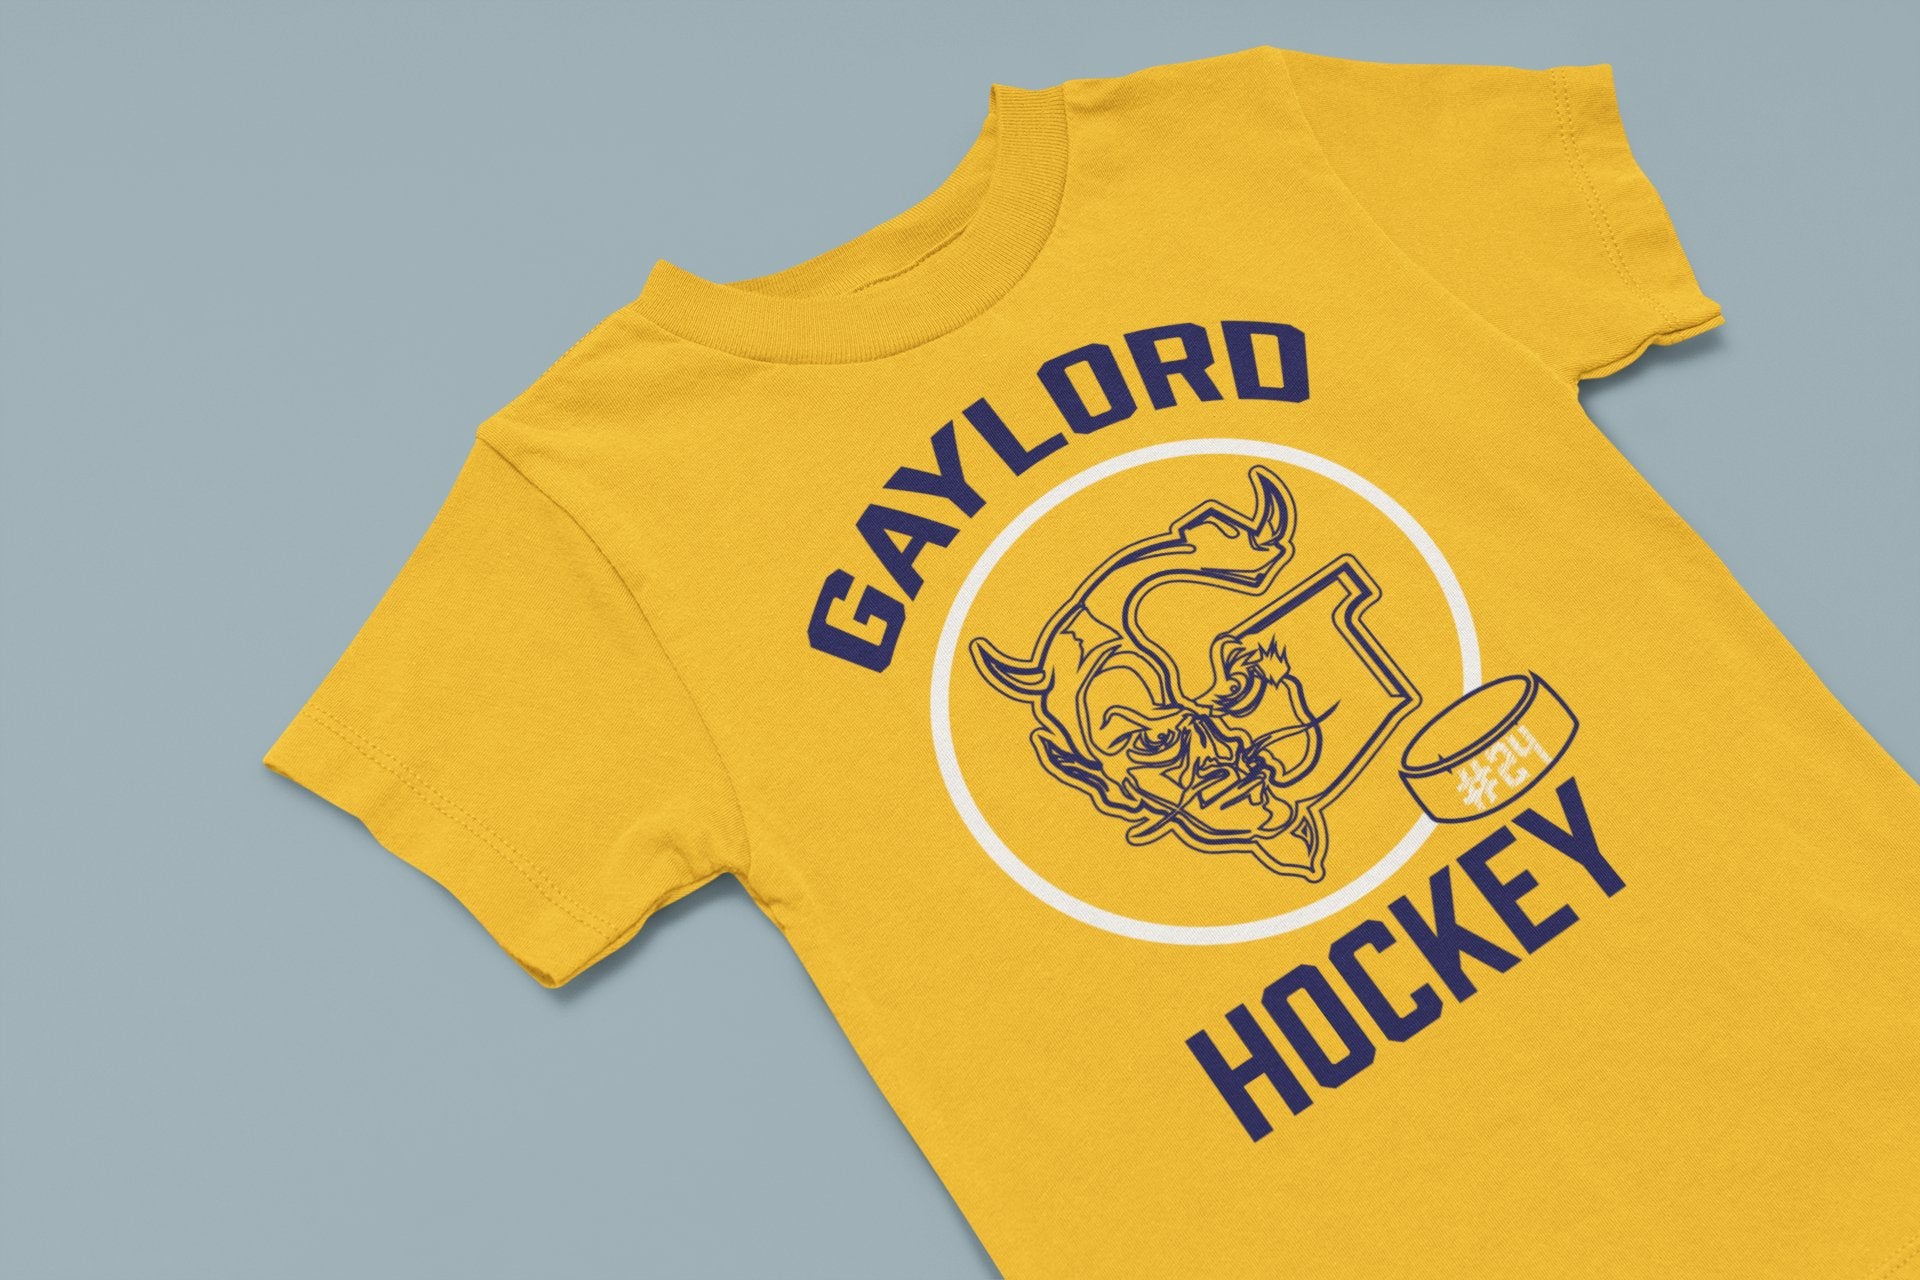 Player # Gaylord Hockey Devil G Hockey Tee - DecalFreakz